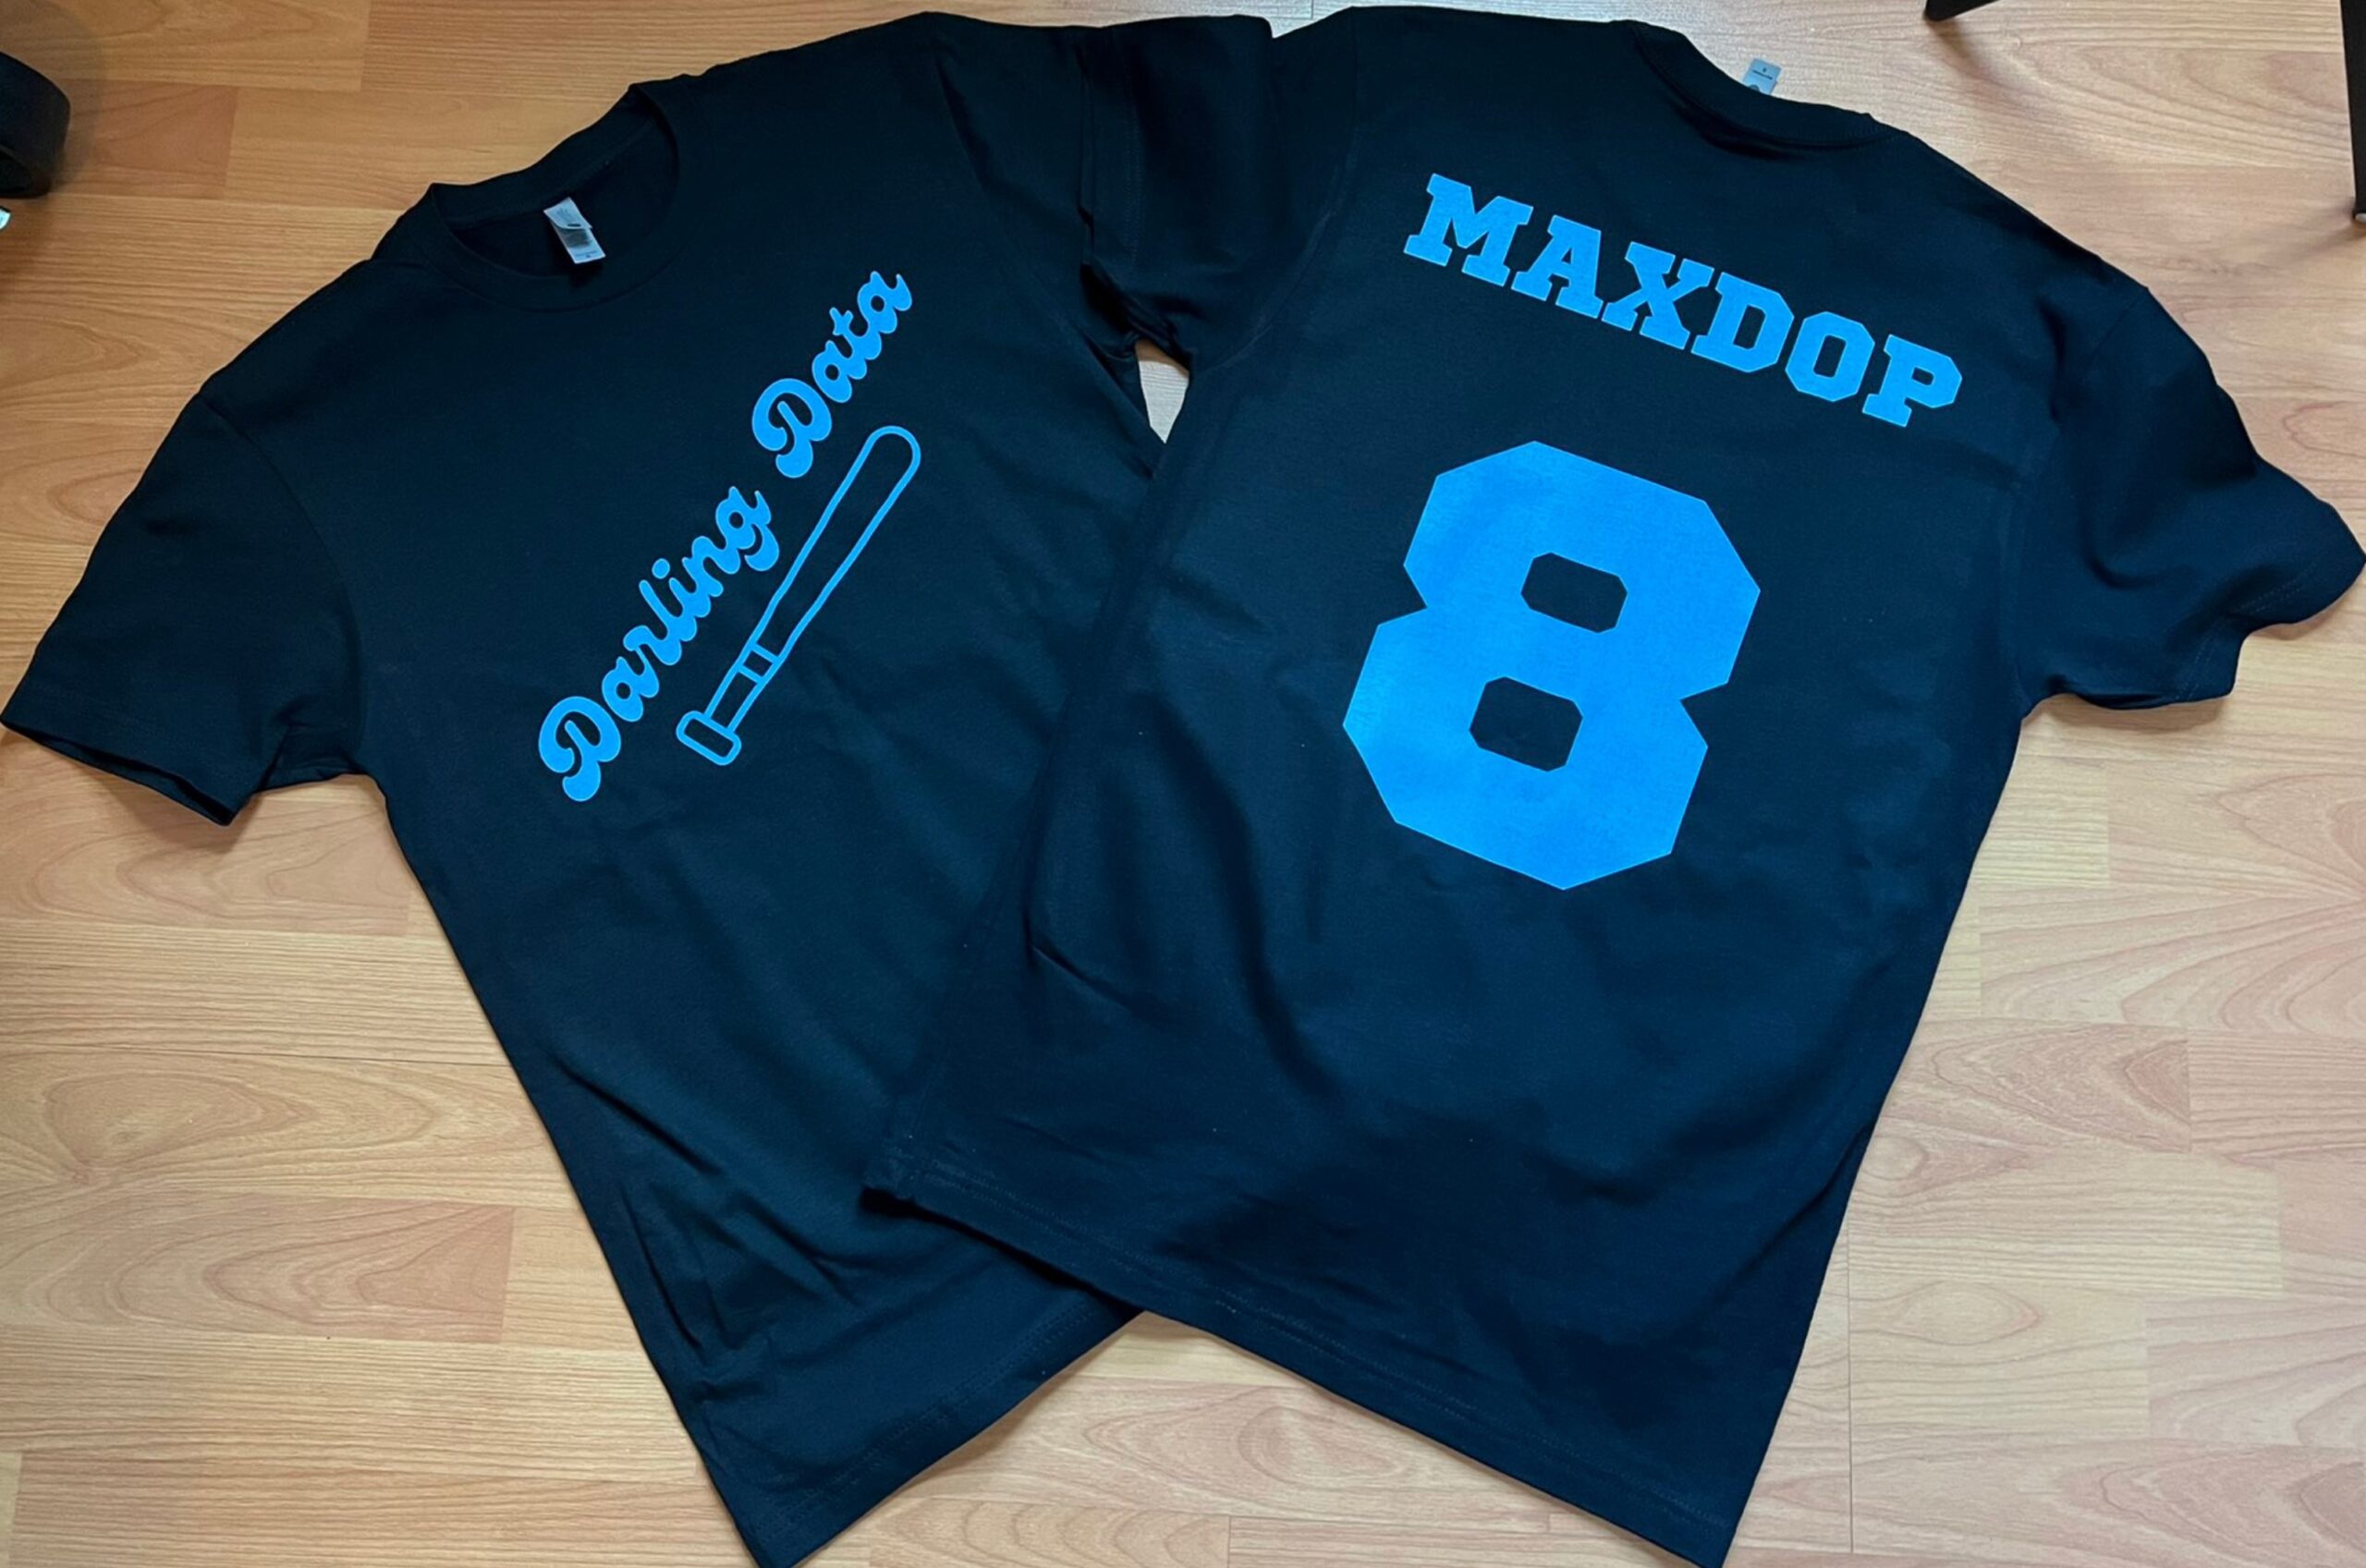 SQL Server MAXDOP shirt